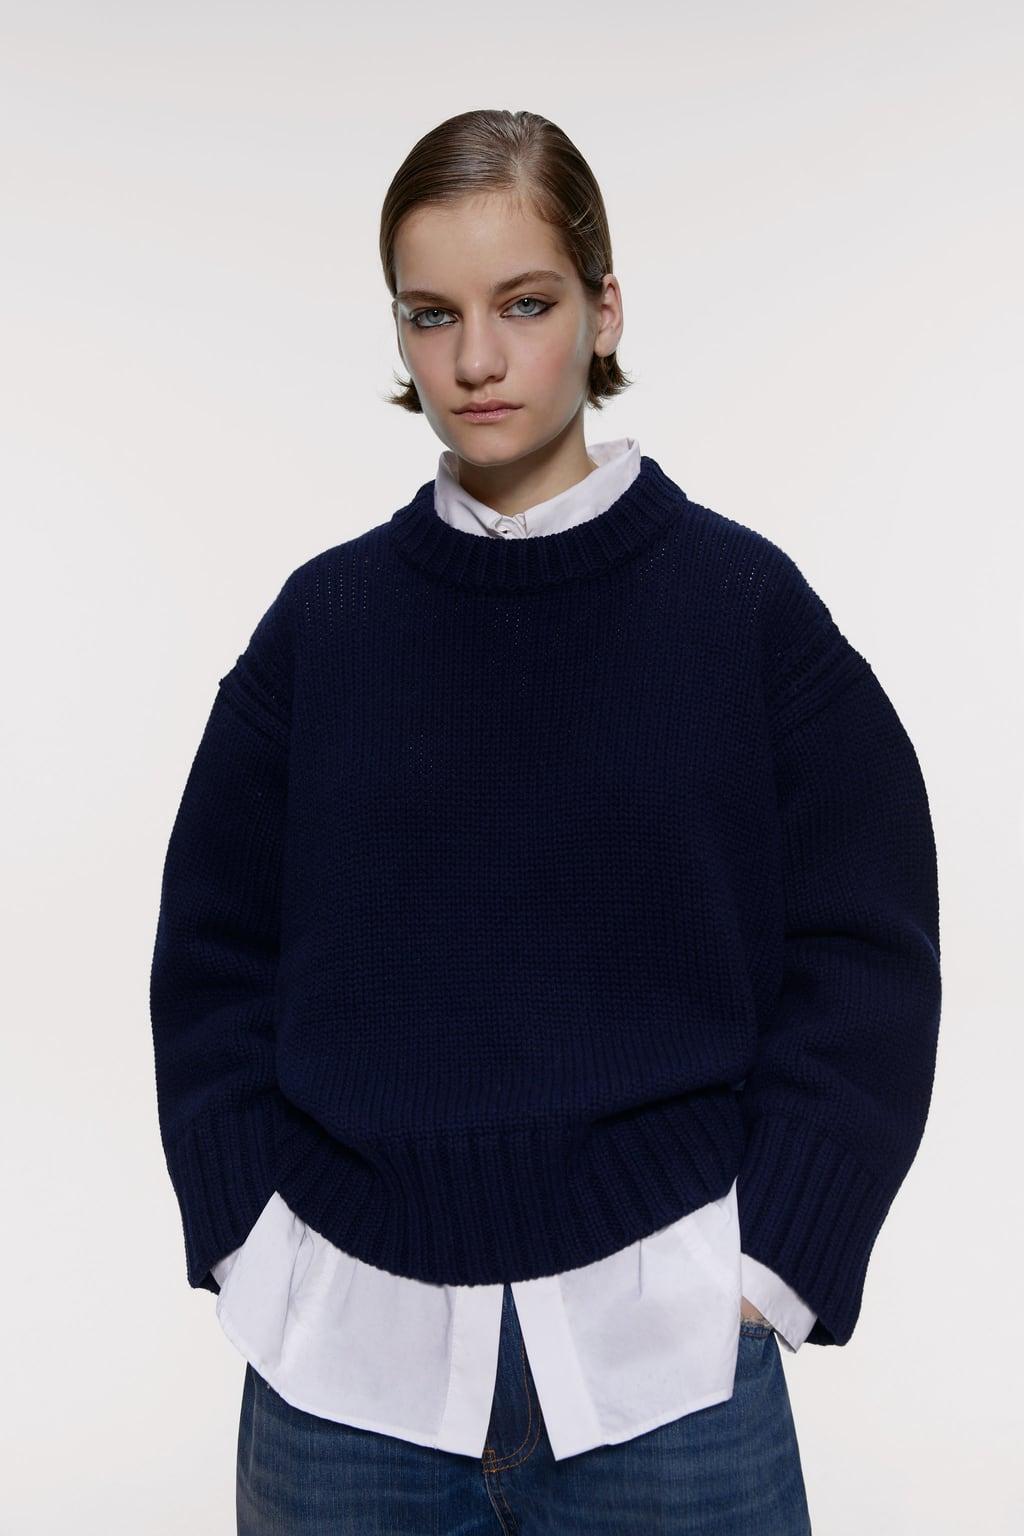 No hay material que se resista: jersey de cashmire a partir de lana reciclada (Join Life Zara)